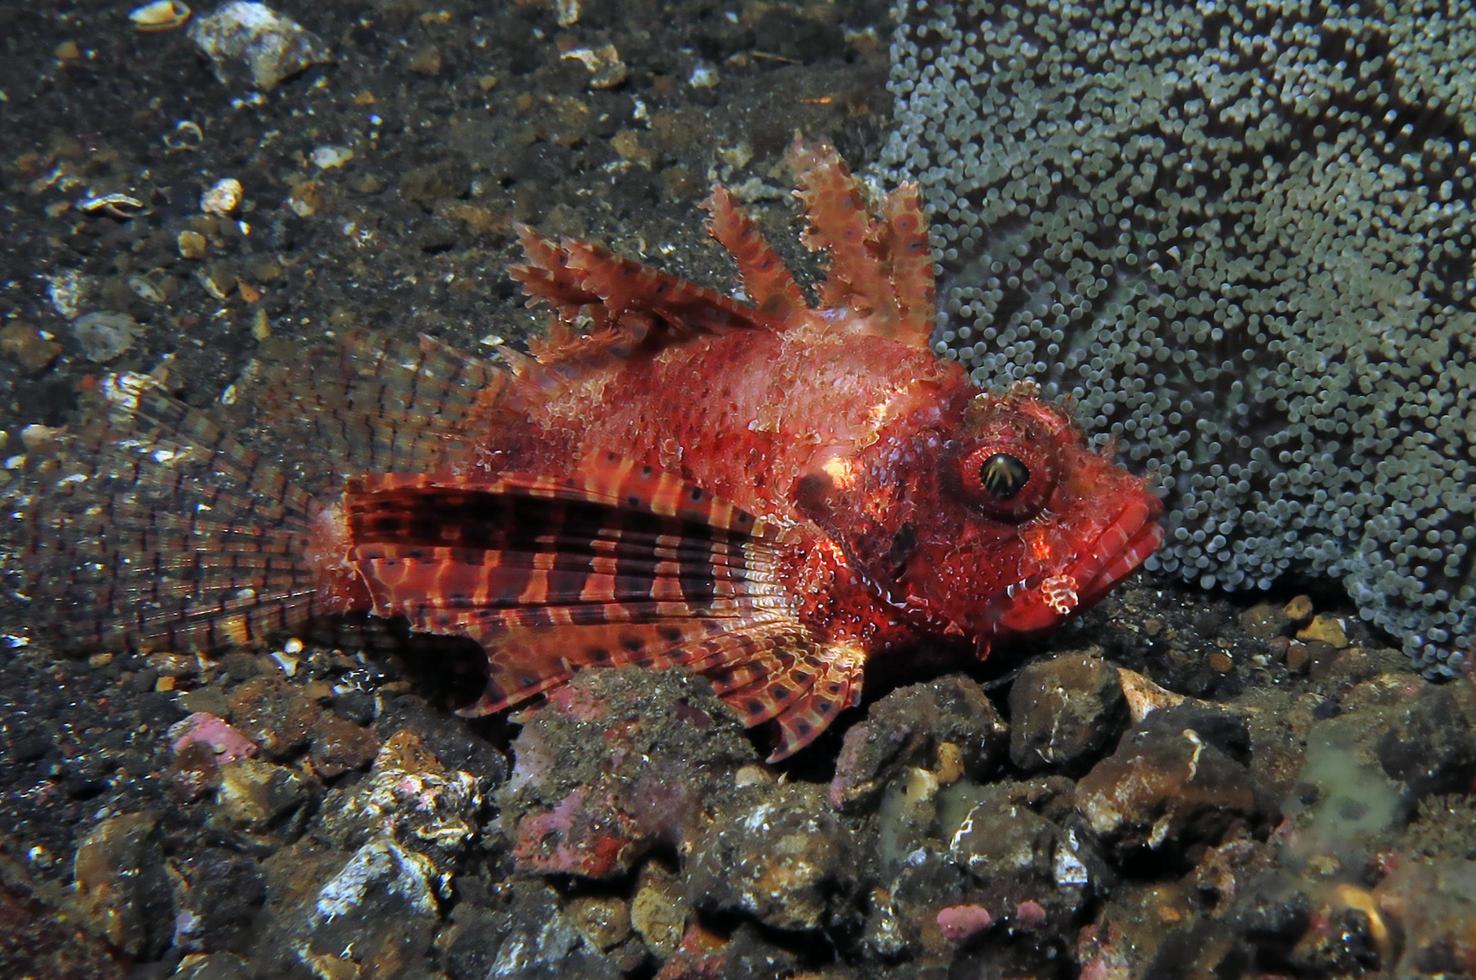 Dangerous Lionfish in the sea. photo